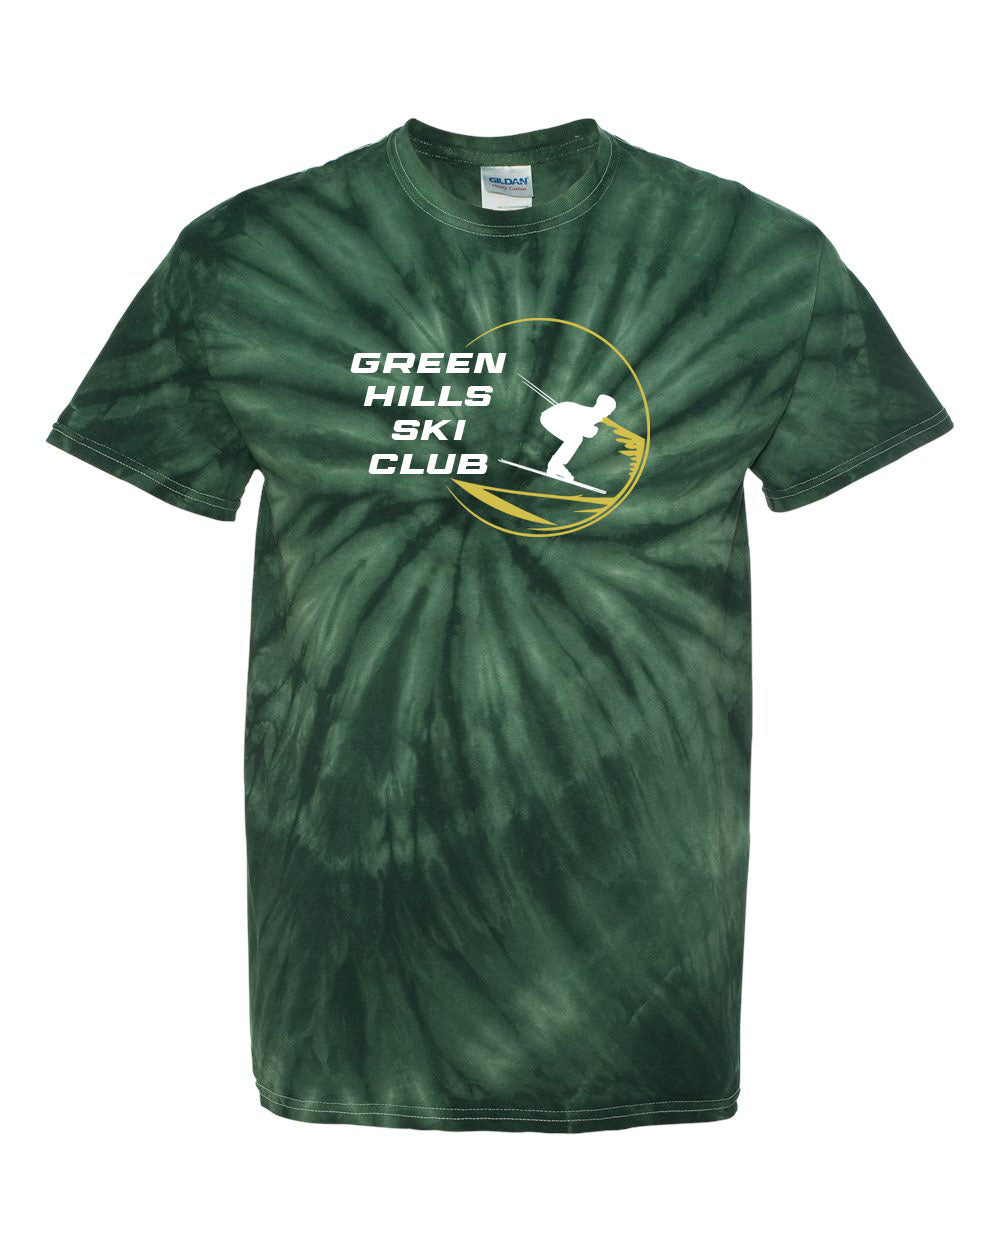 Green Hills Ski Club Tie Dye t-shirt Design 1